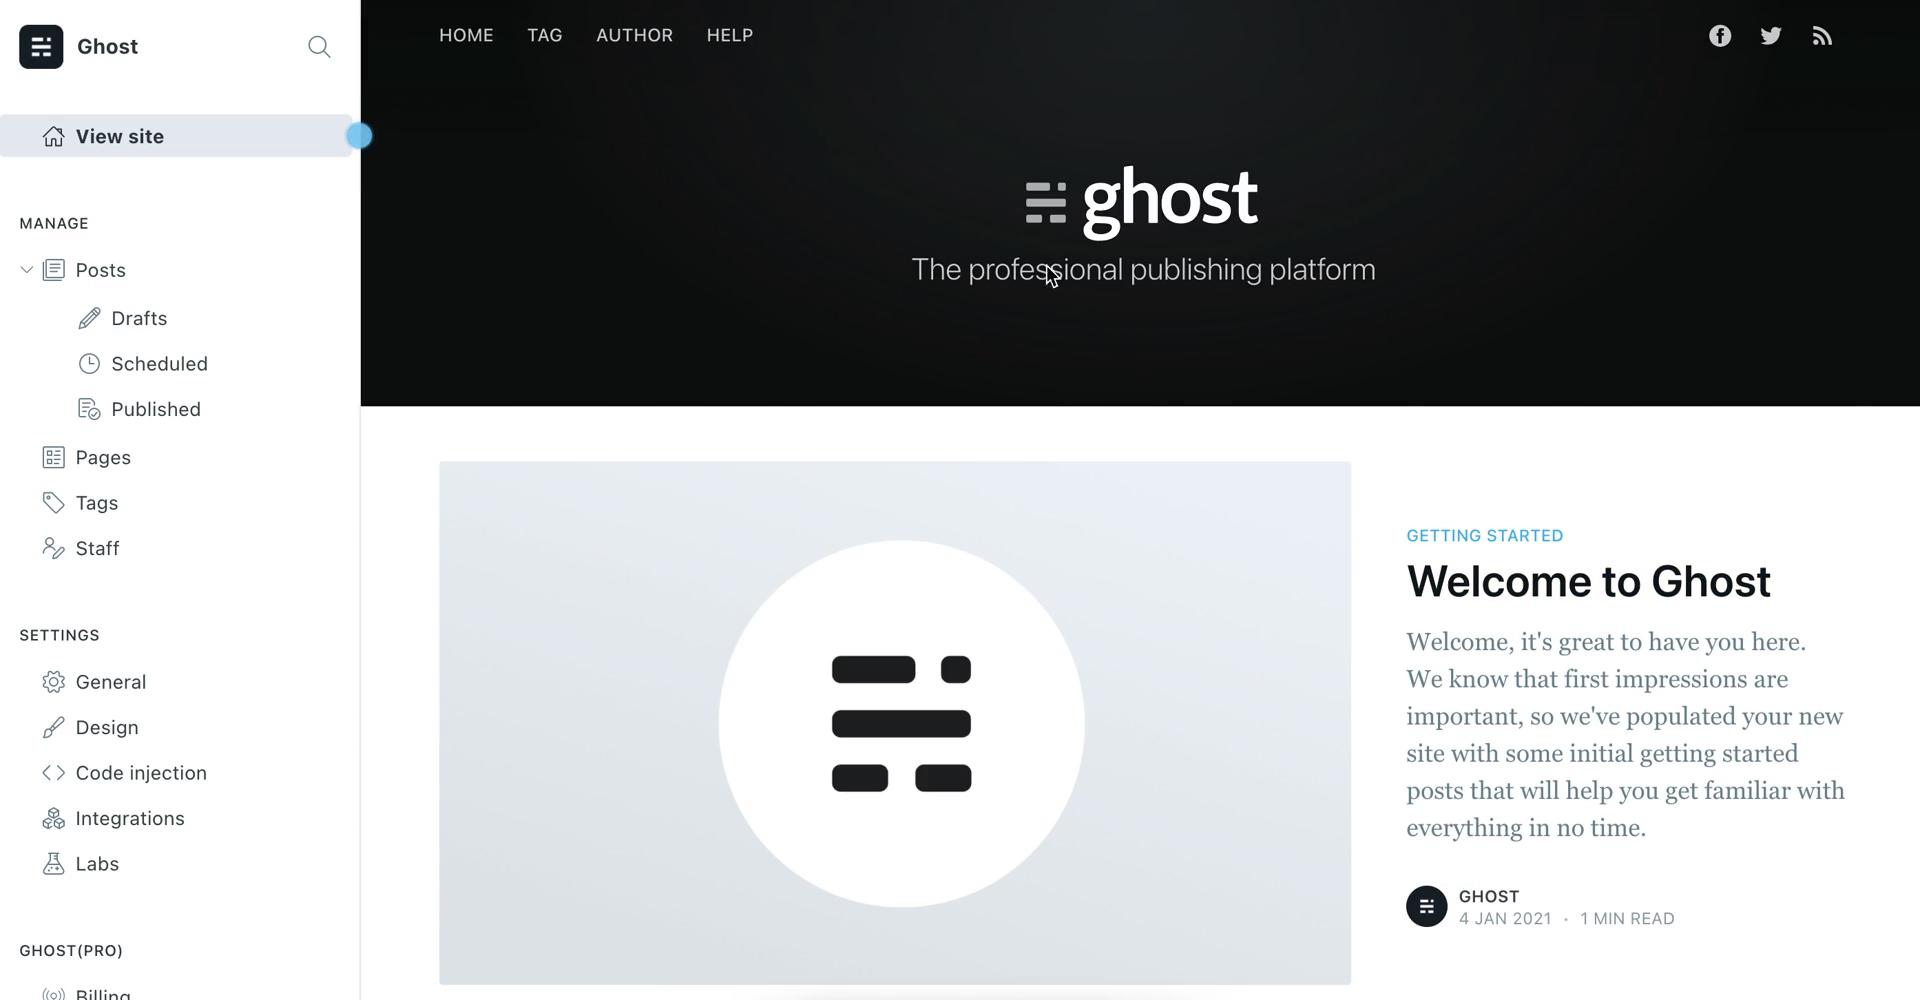 Ghost website preview screenshot